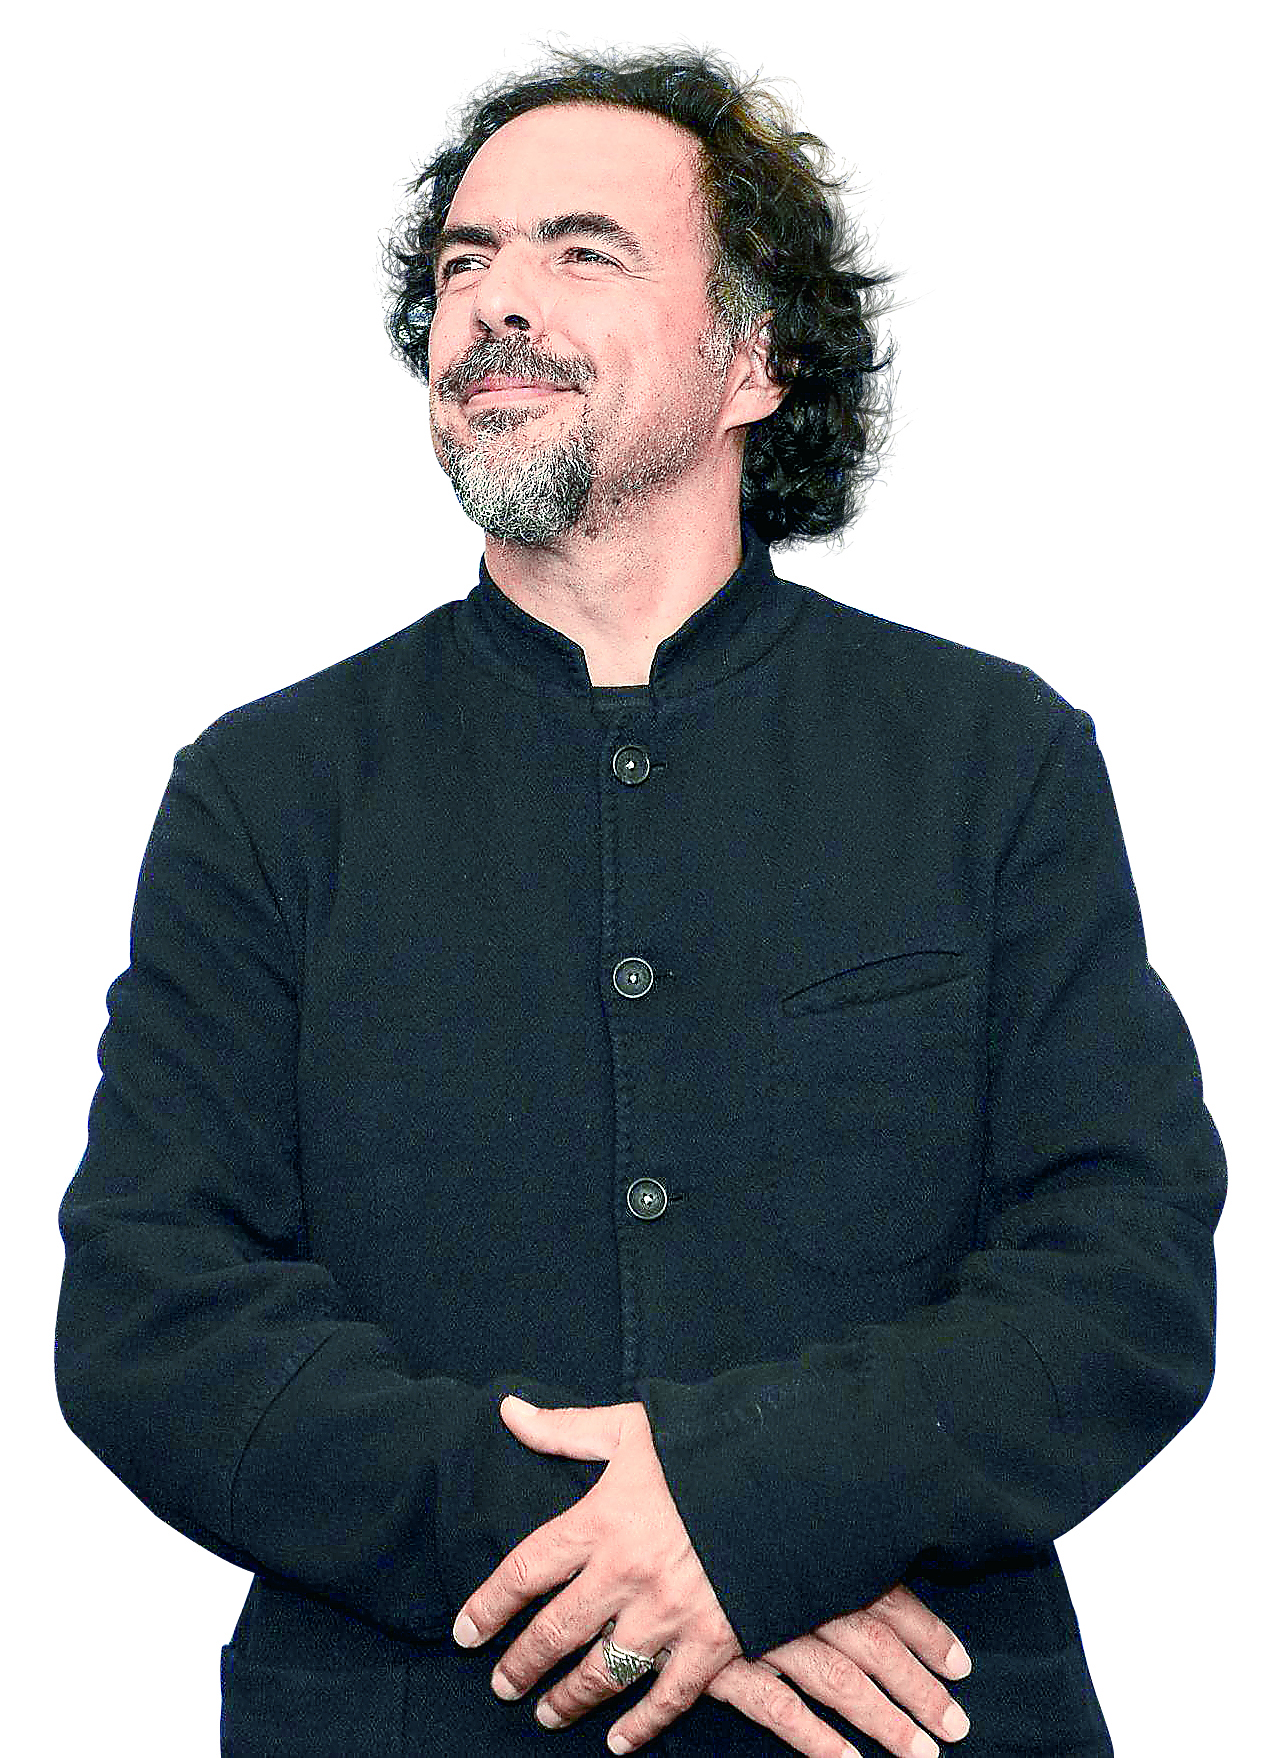 Cuando vean mi película 'The Revenant', dirán ‘wow’: Iñárritu